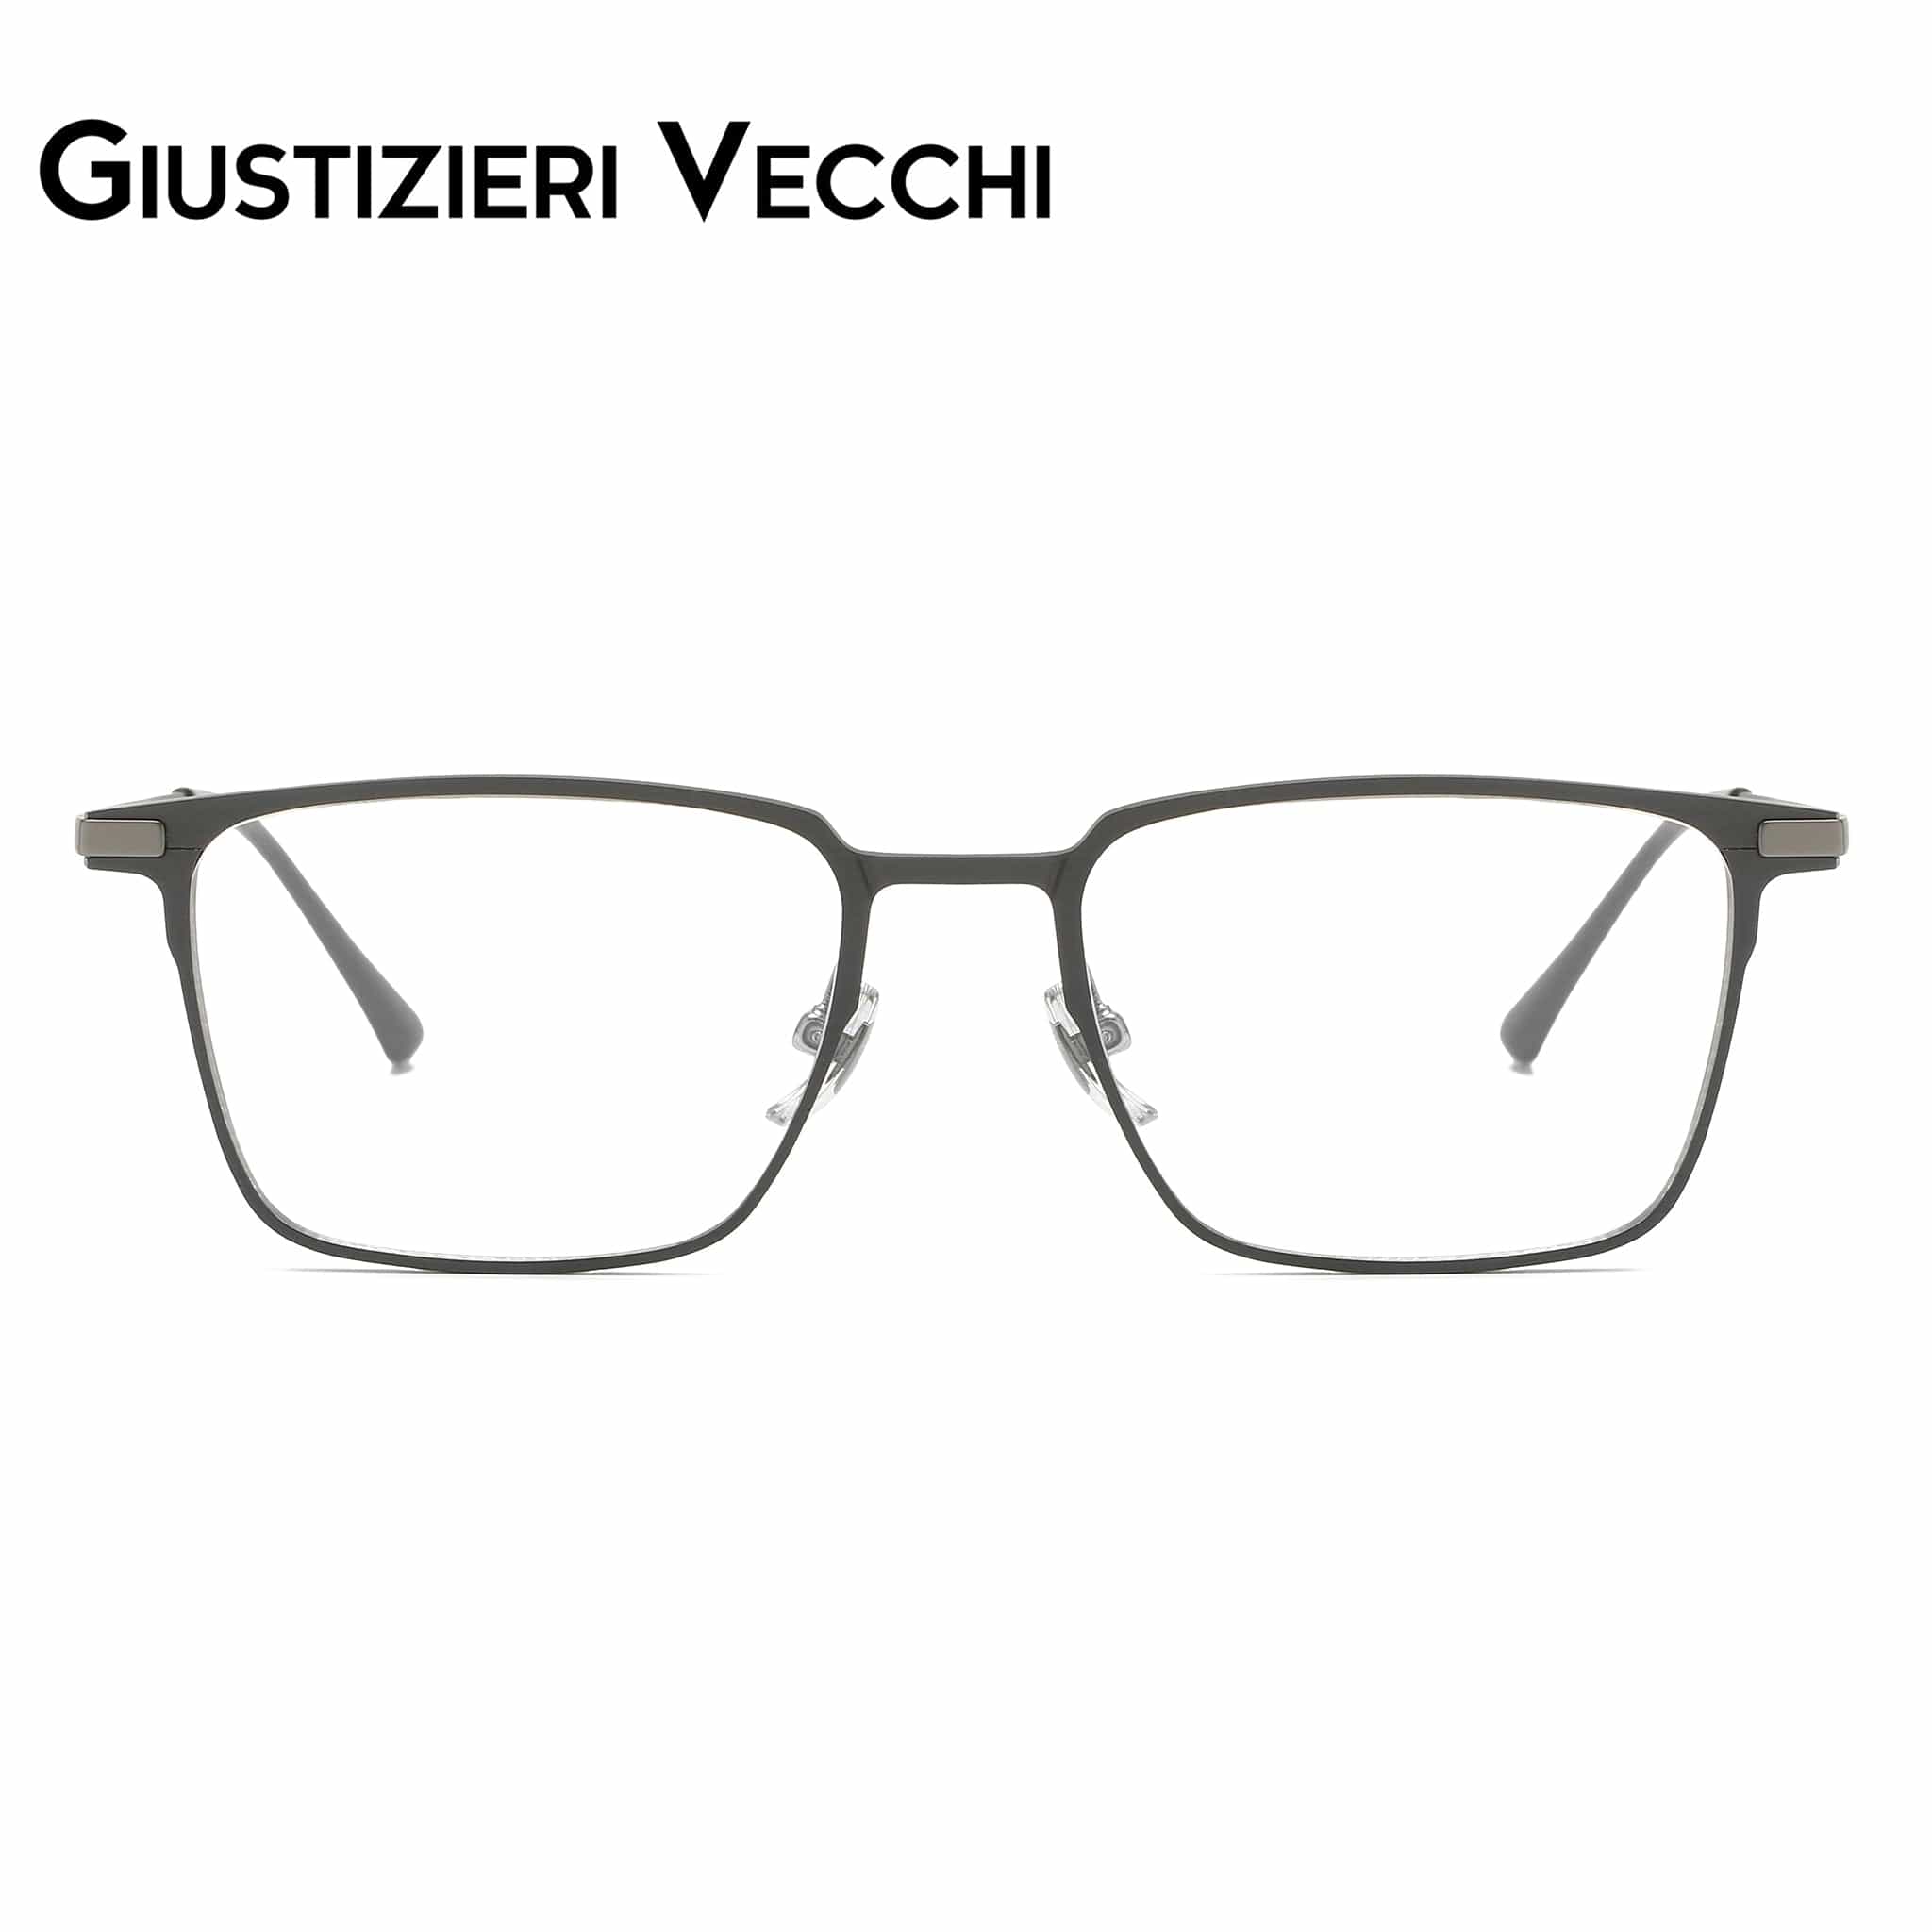 GIUSTIZIERI VECCHI Eyeglasses Medium / Gunmetal Grey SkyBlaze